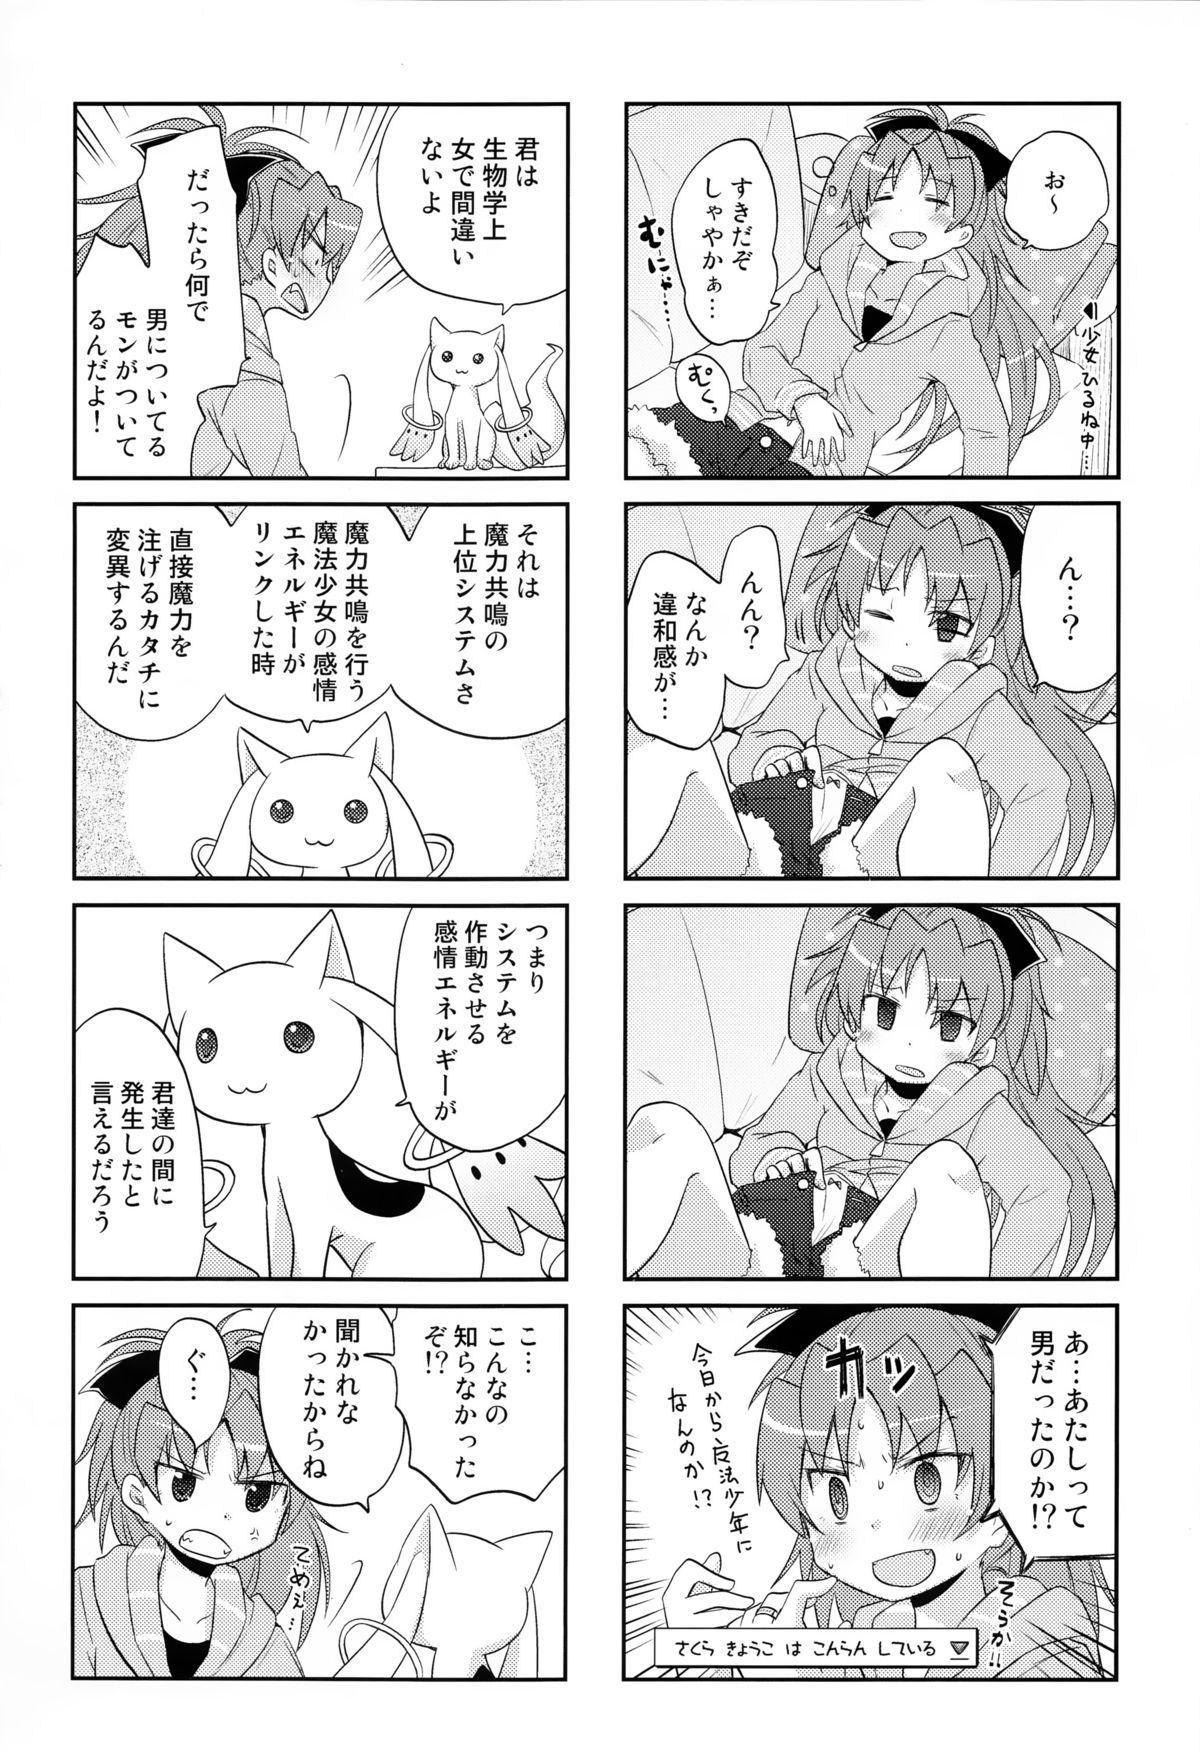 Pee Futari no Hatsukousen - Puella magi madoka magica Storyline - Page 3